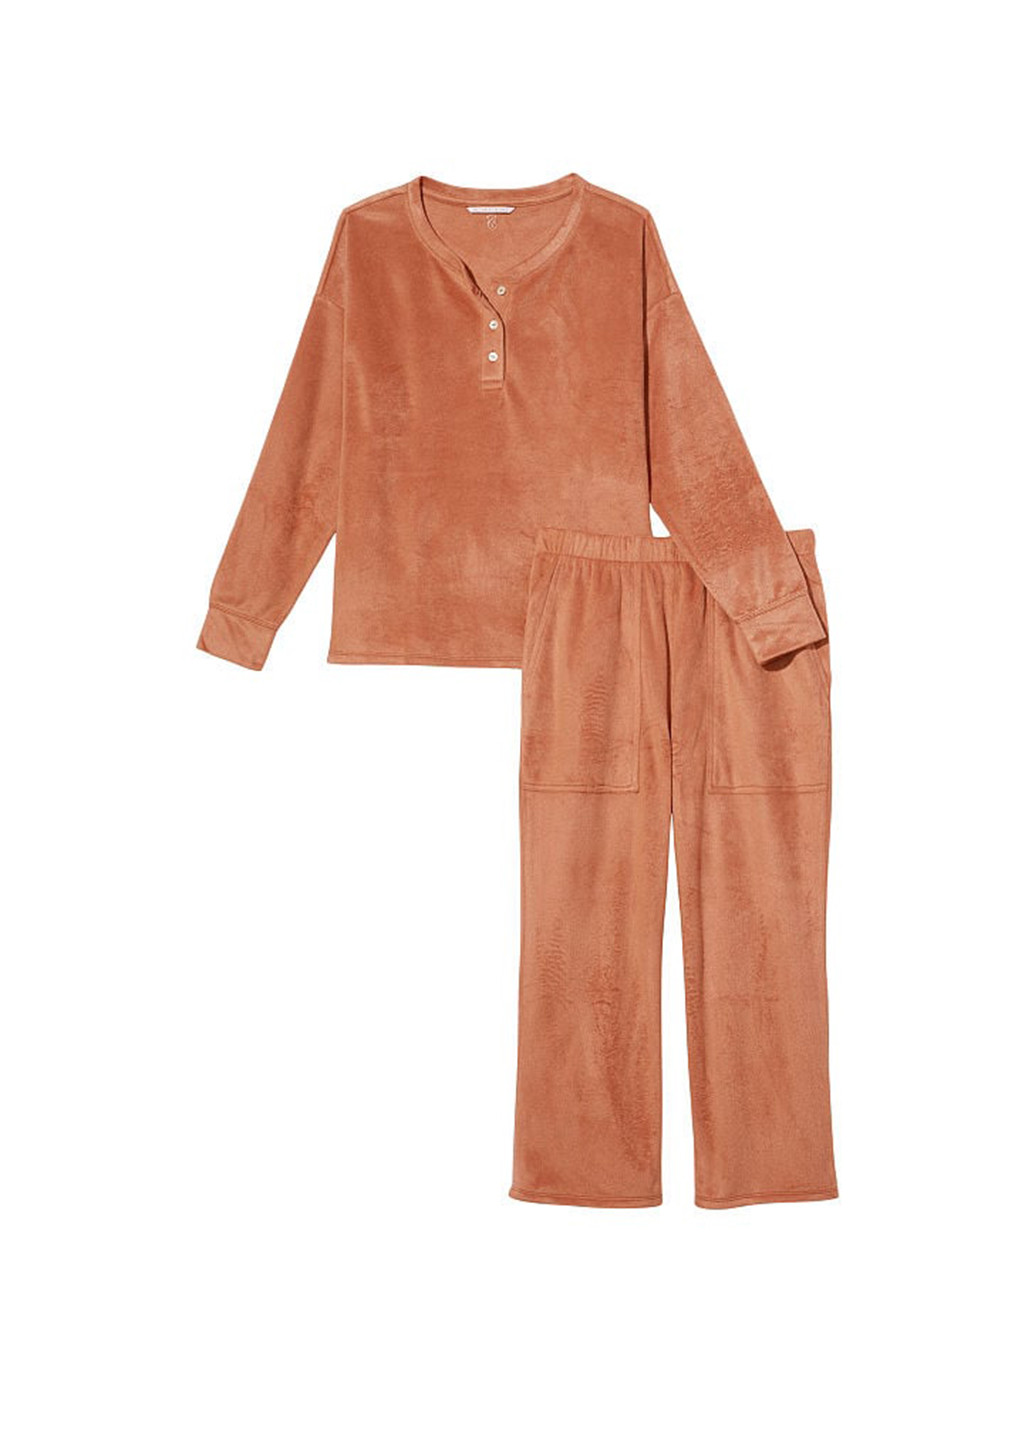 Светло-коричневая всесезон пижама (кофта+брюки) кофта + брюки Victoria's Secret